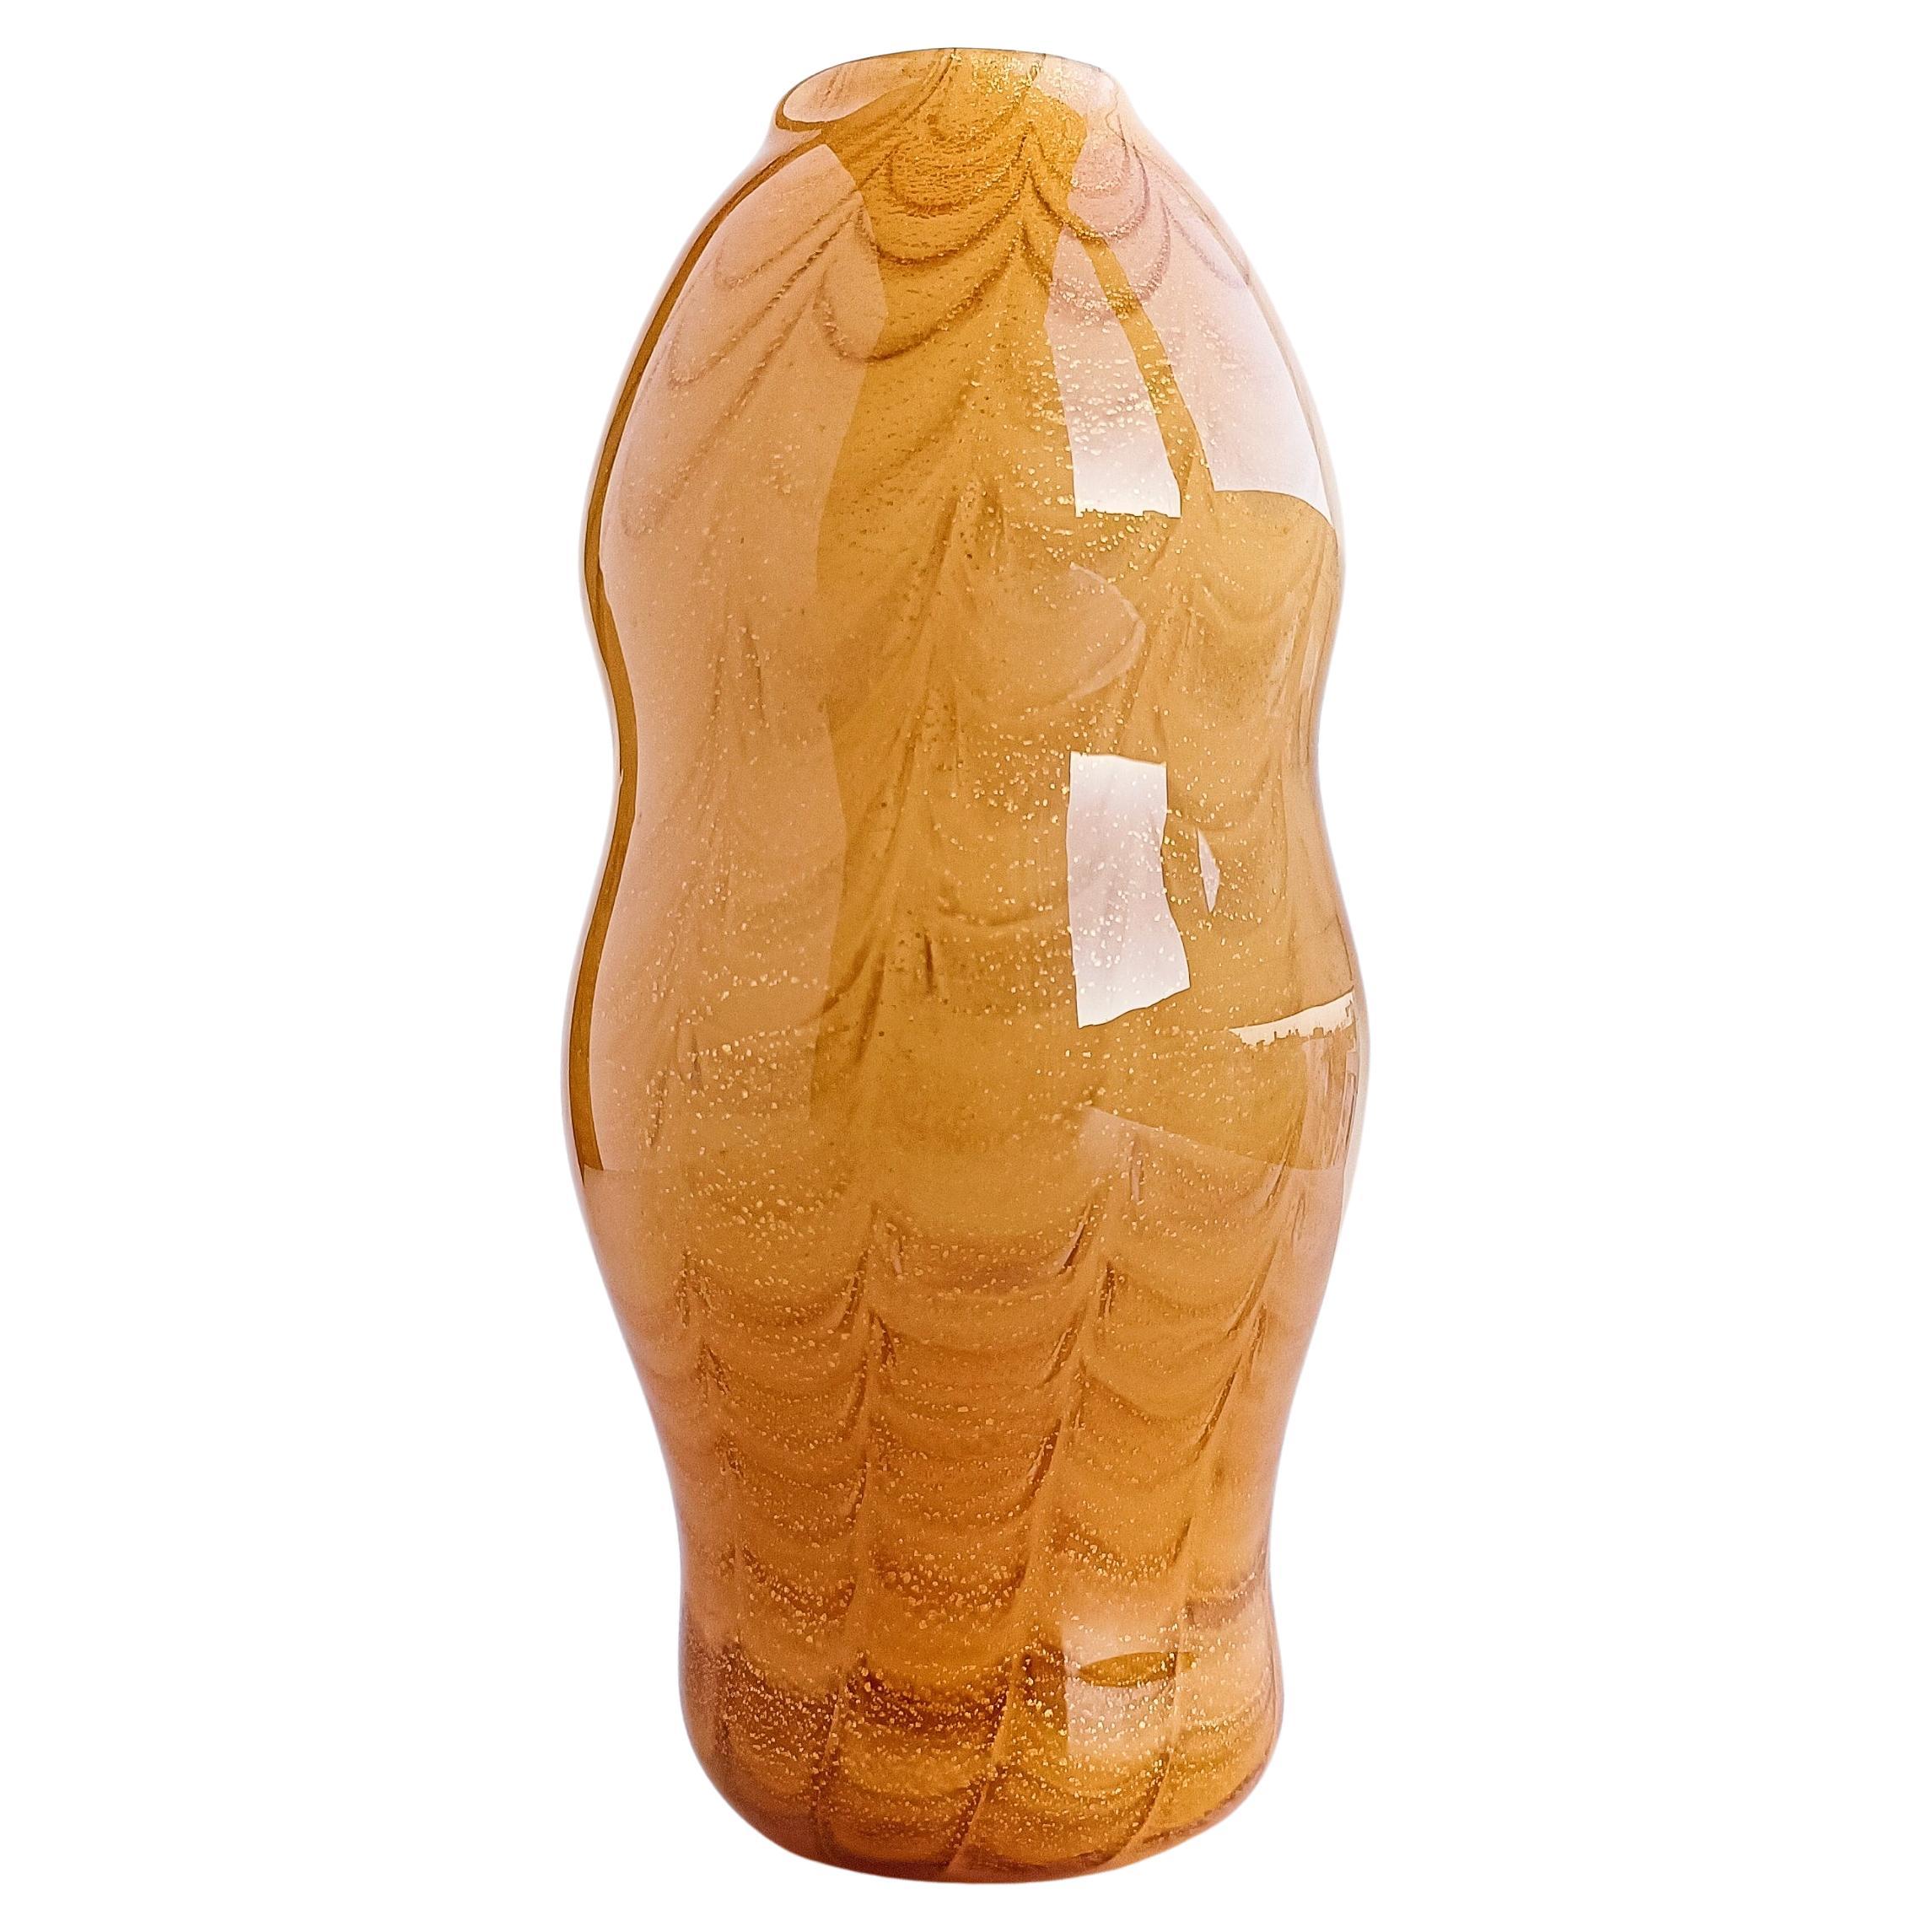 Art Glass Vintage Italian Art Deco Signed Murano Glass Vase With Gold Flecks For Sale